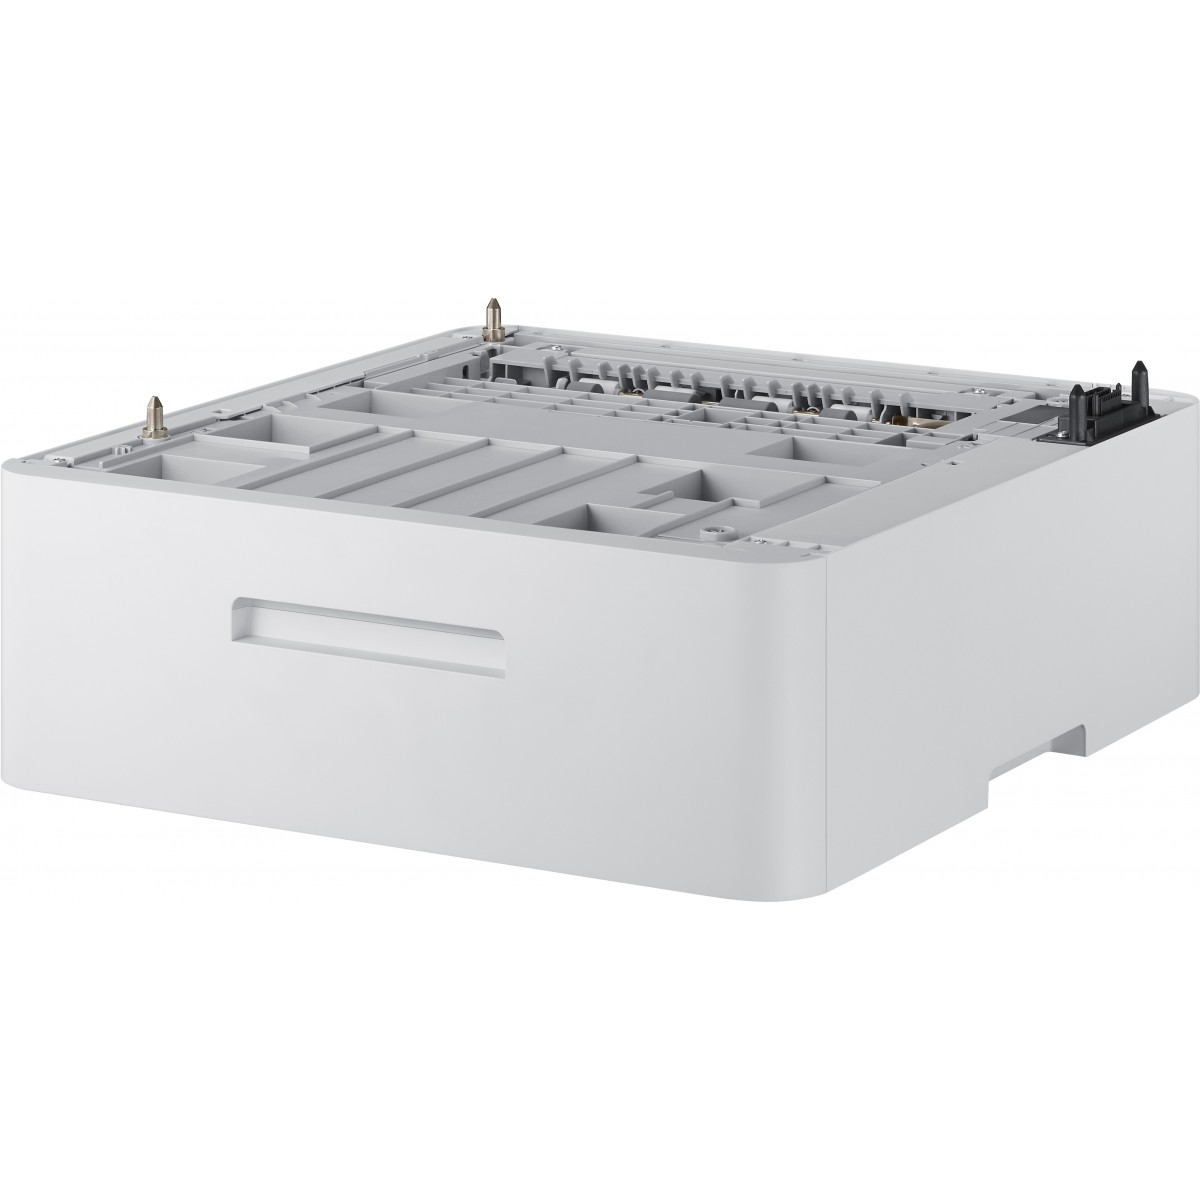 HP SL-SCF3001 - Multi-Purpose tray - Samsung - C4060FX C4010ND - 550 sheets - White